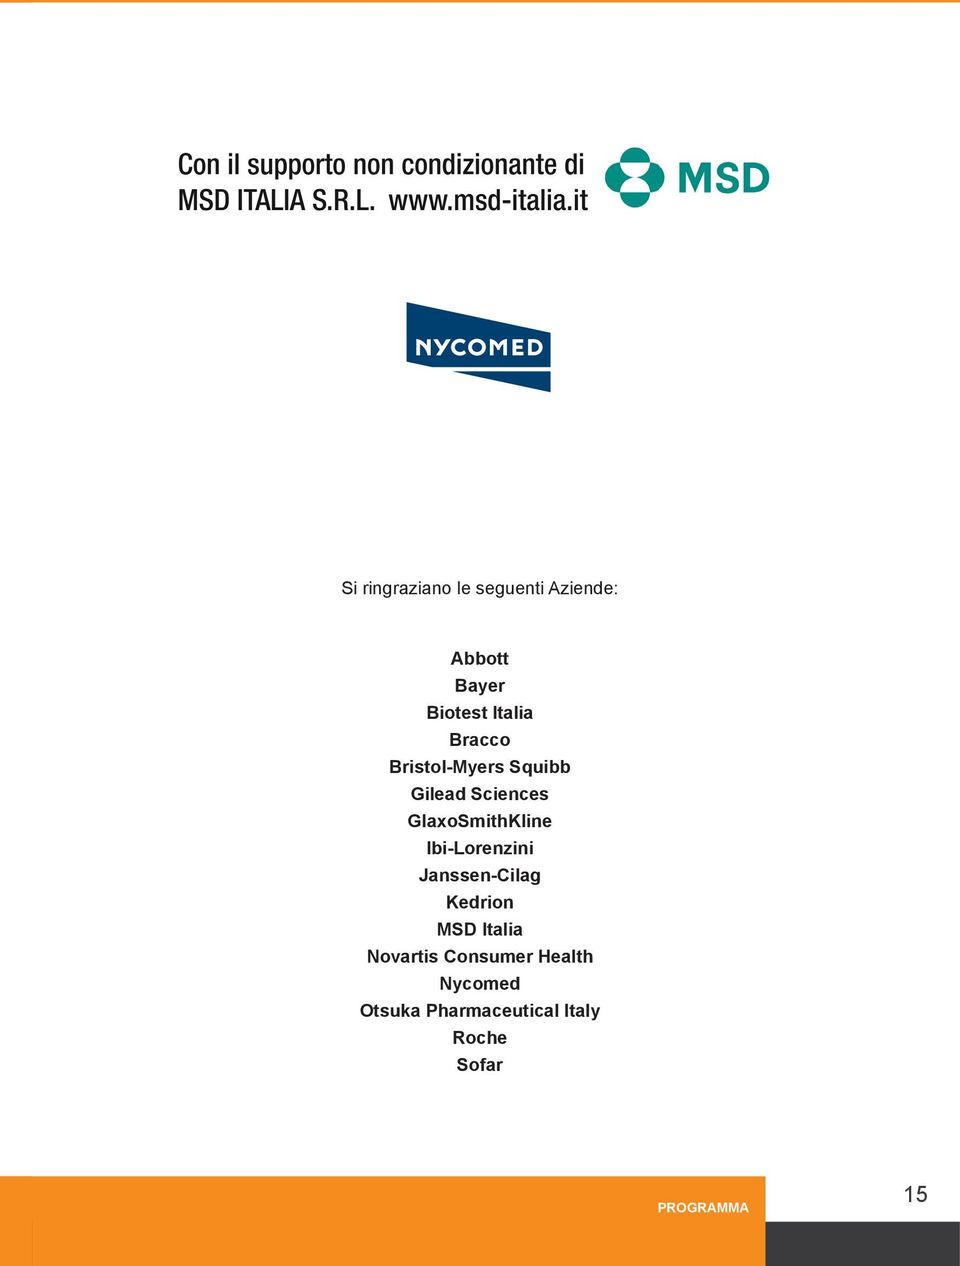 Ibi-Lorenzini Janssen-Cilag Kedrion MSD Italia Novartis